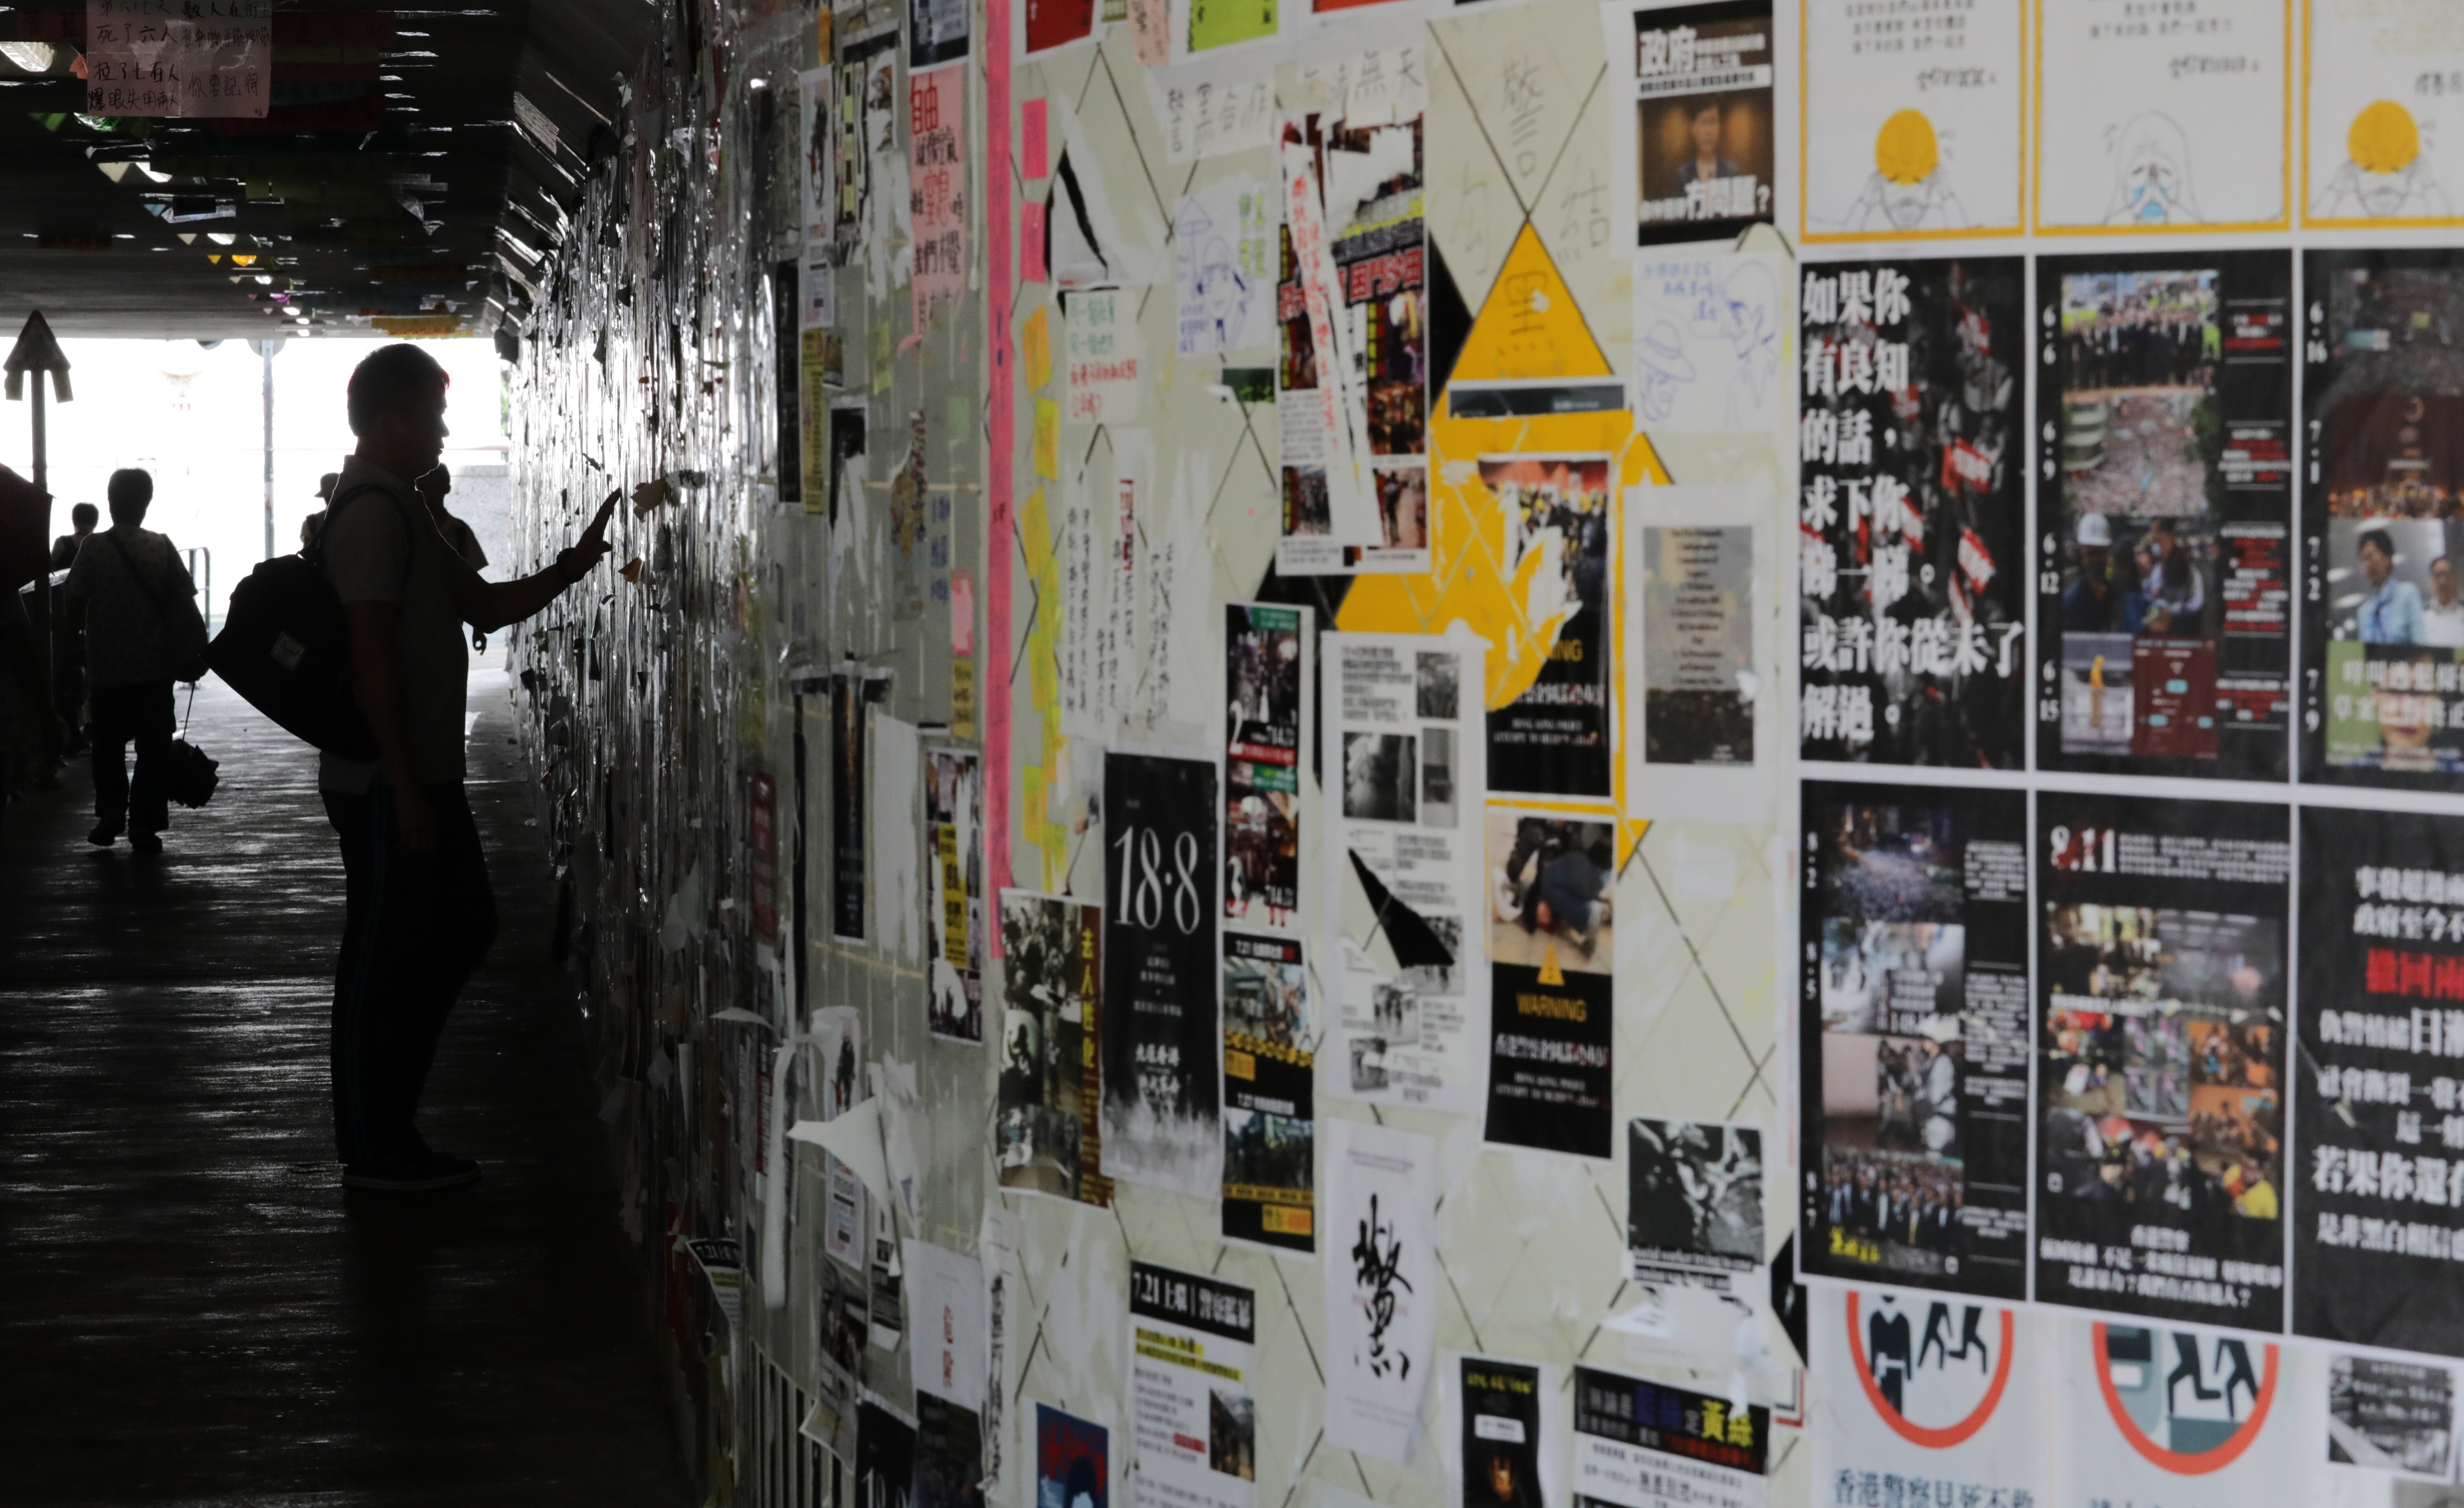 The attack took place at a ‘Lennon Wall’ in Tseung Kwan O. Photo: May Tse